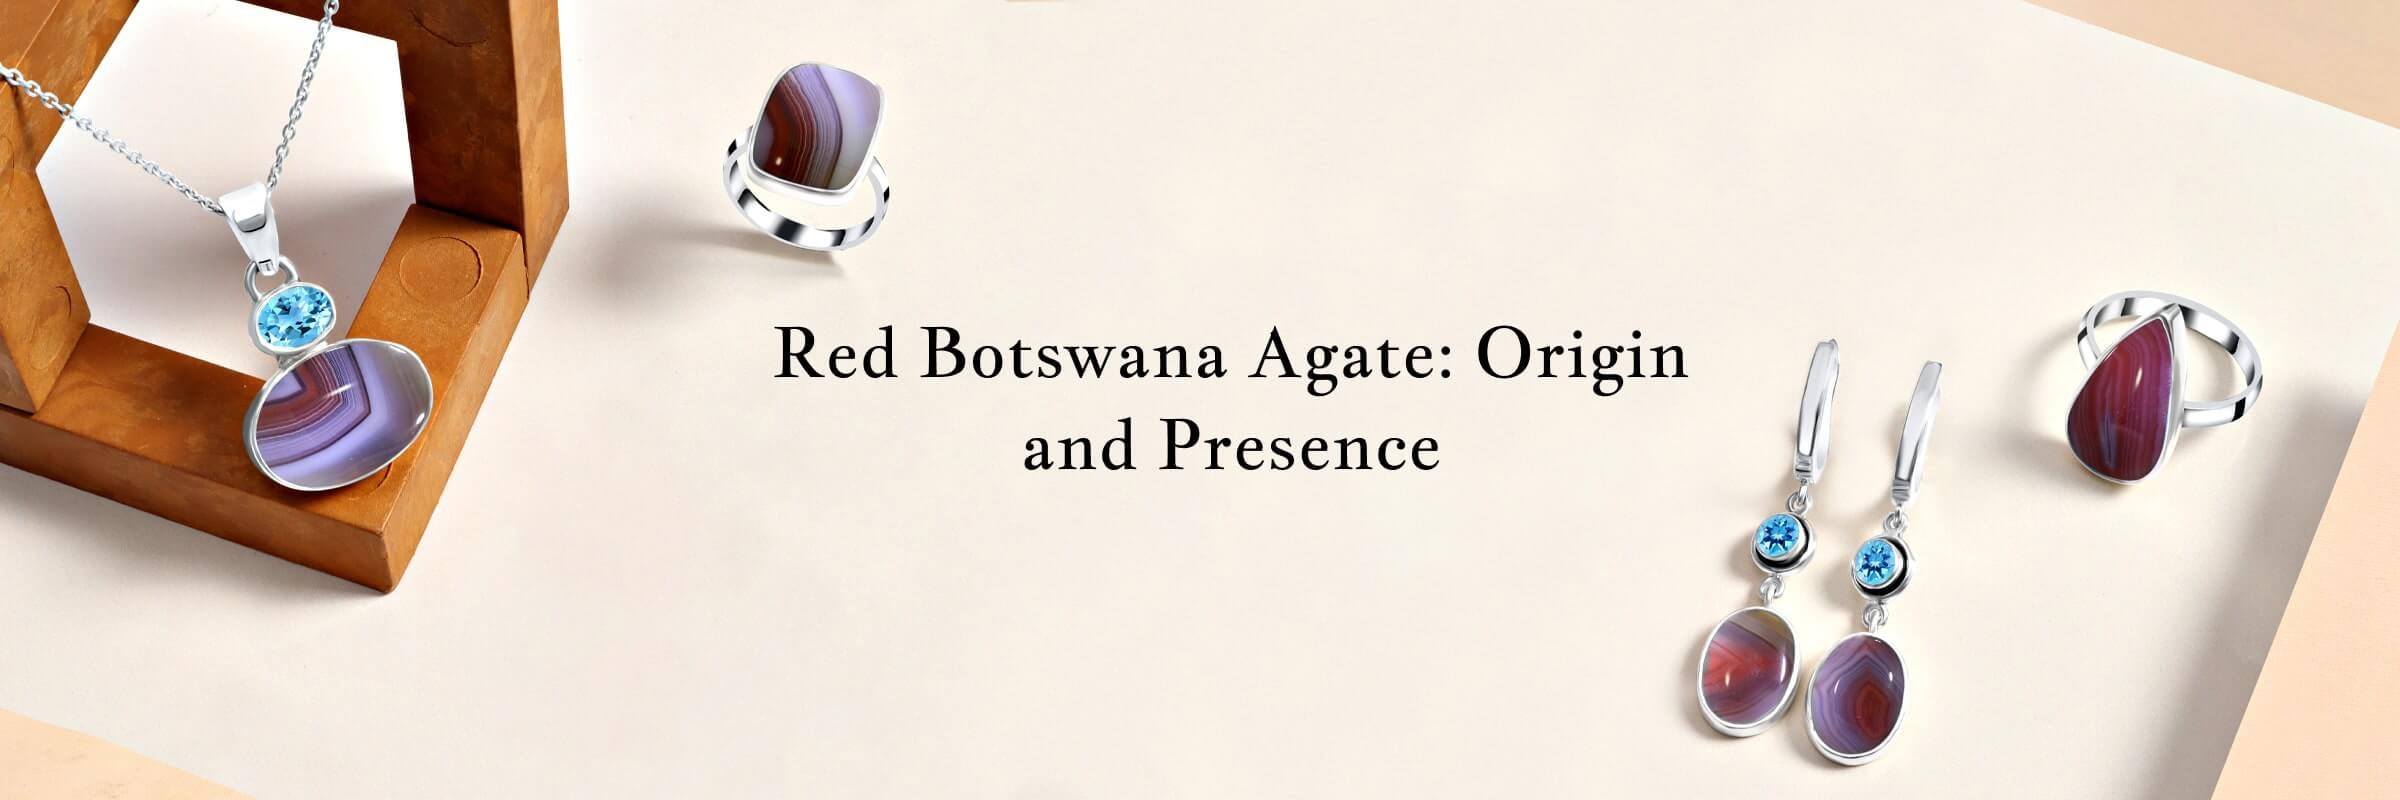 Where Is Botswana Agate Found